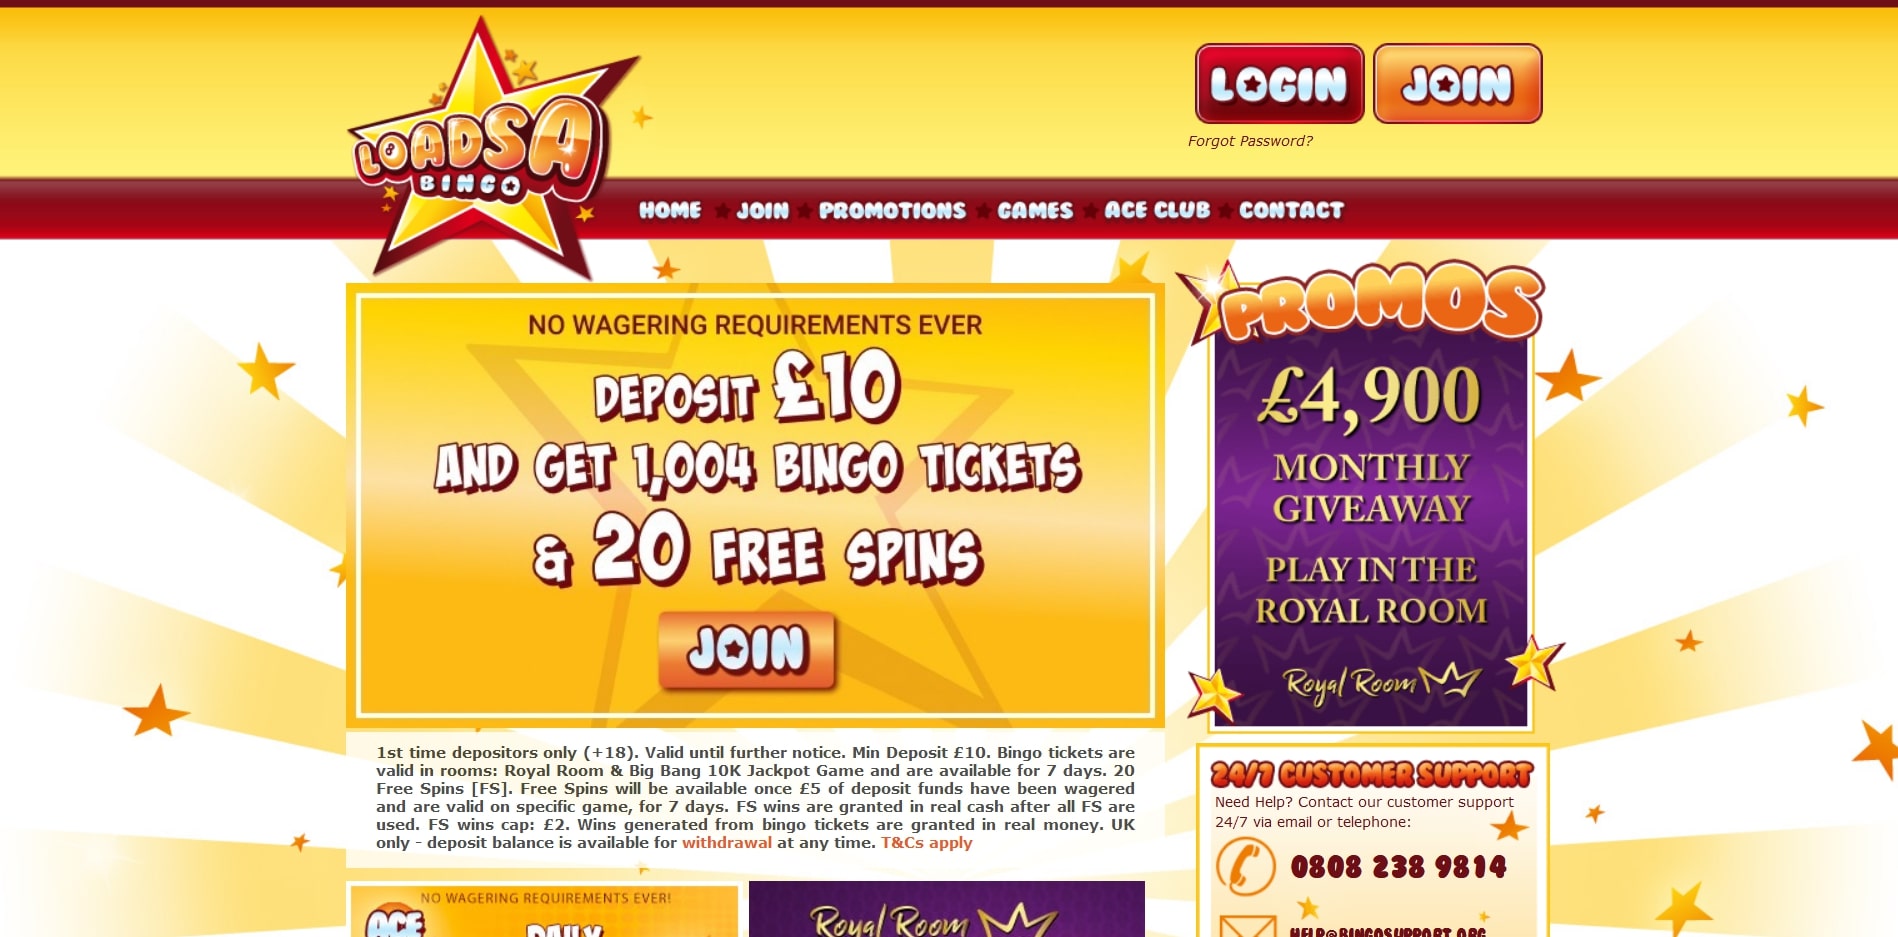 Loadsa Bingo Casino Review